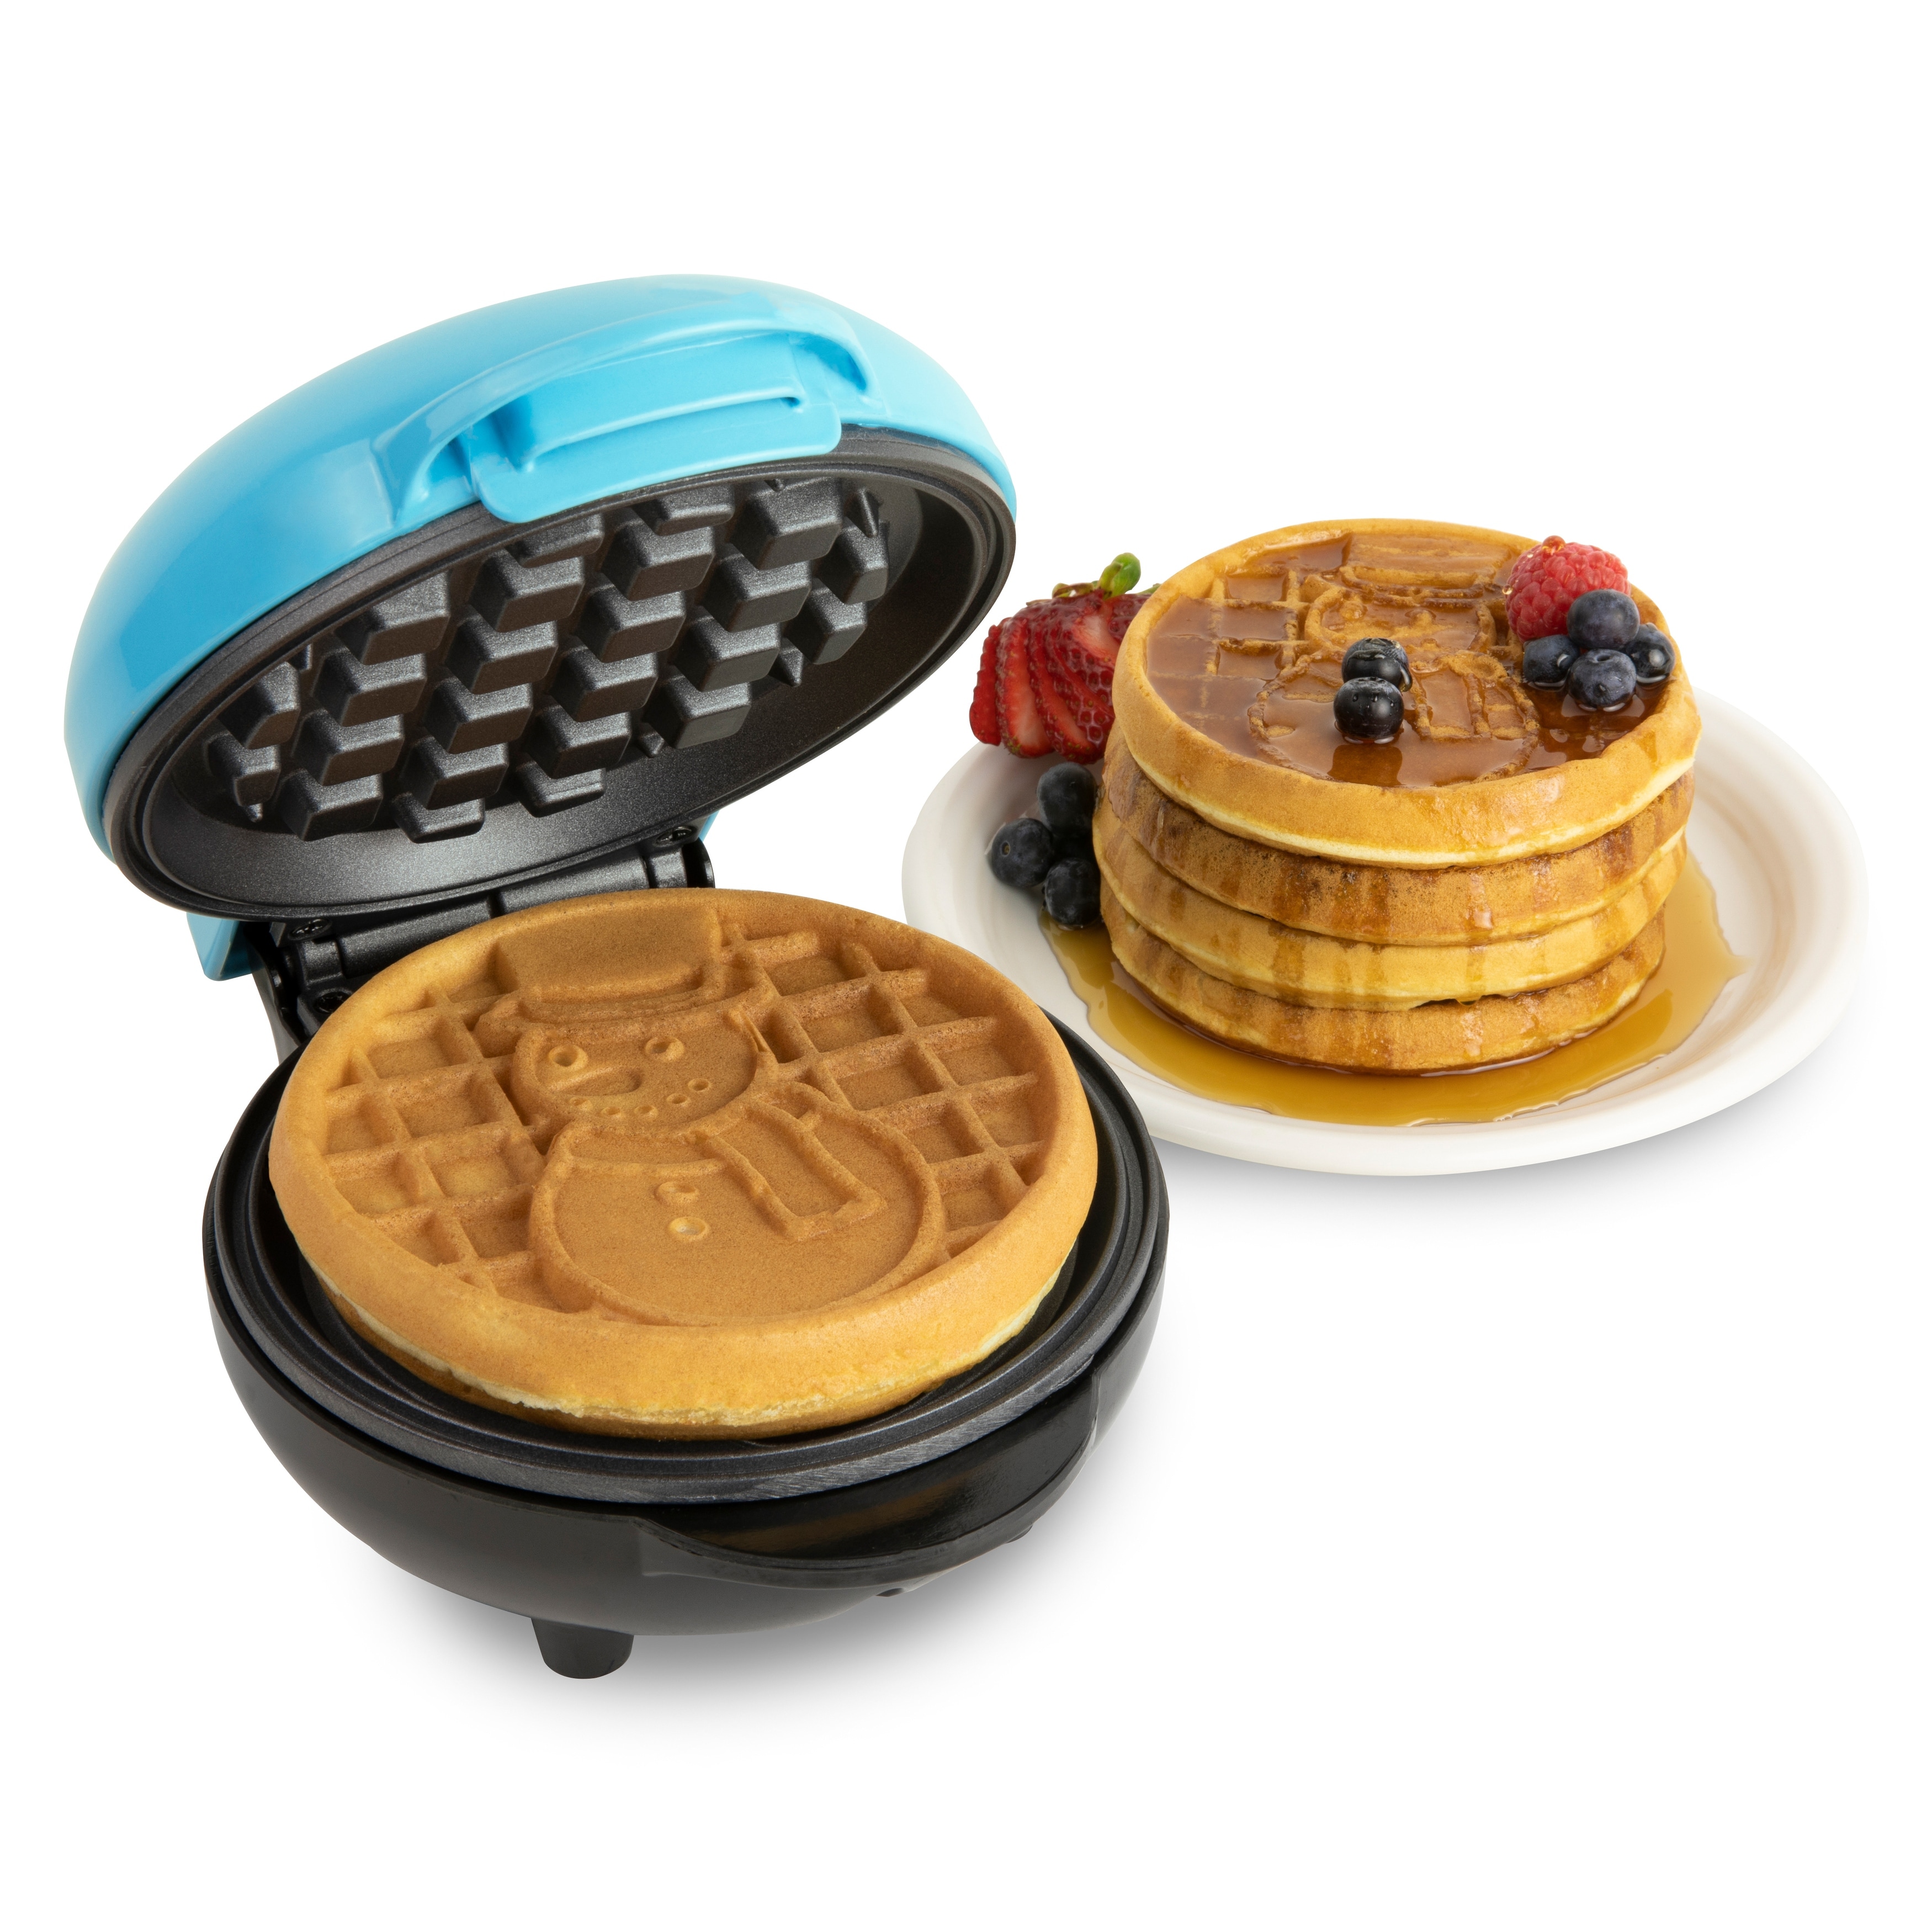 Proctor Silex Double Mini Waffle Maker Machine with 4 Round Non